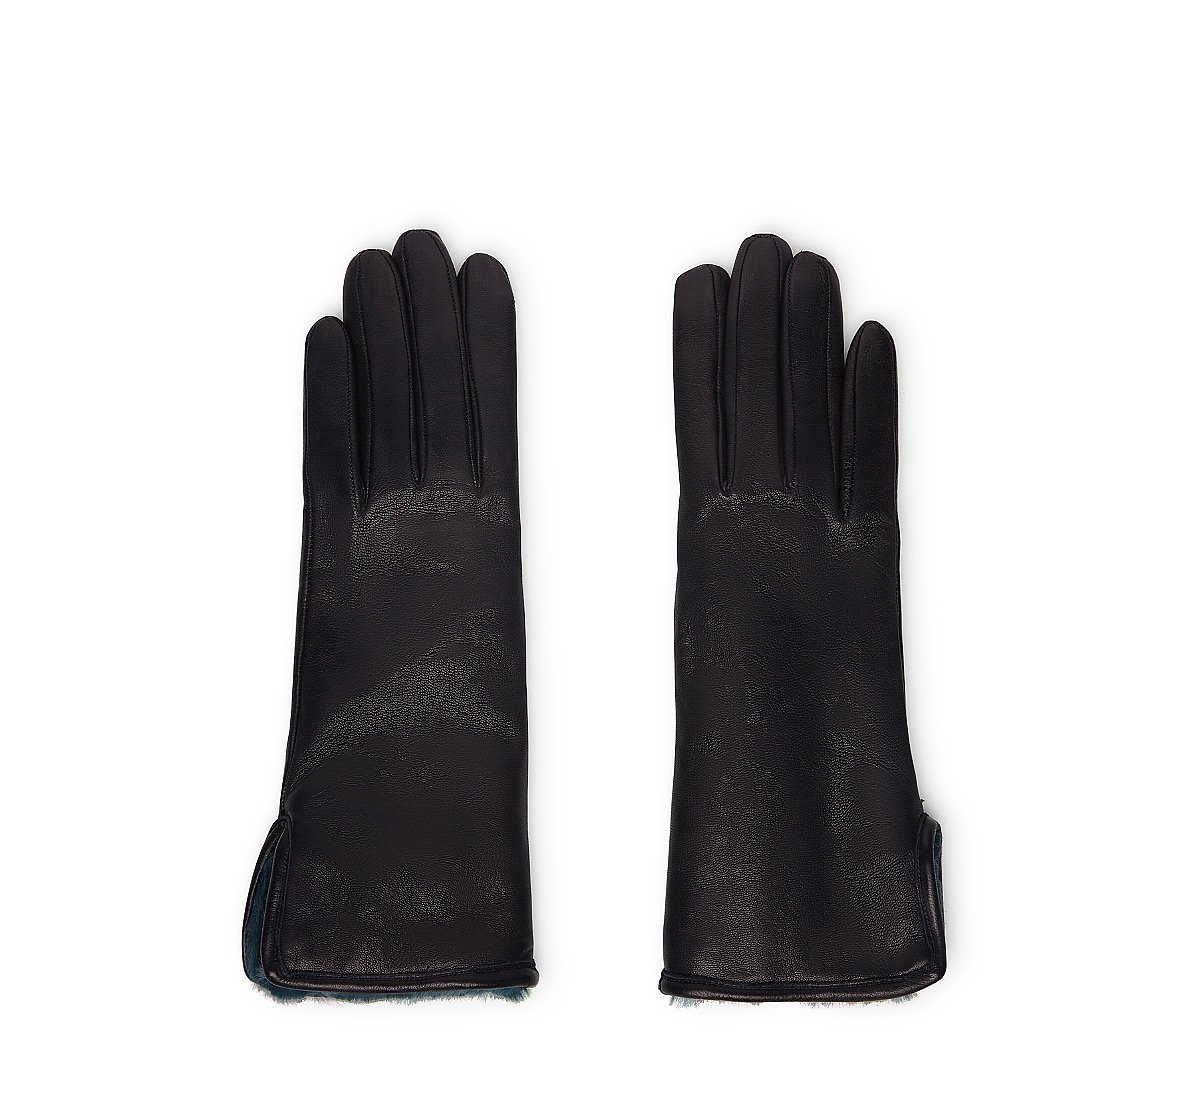 Black gloves with fur